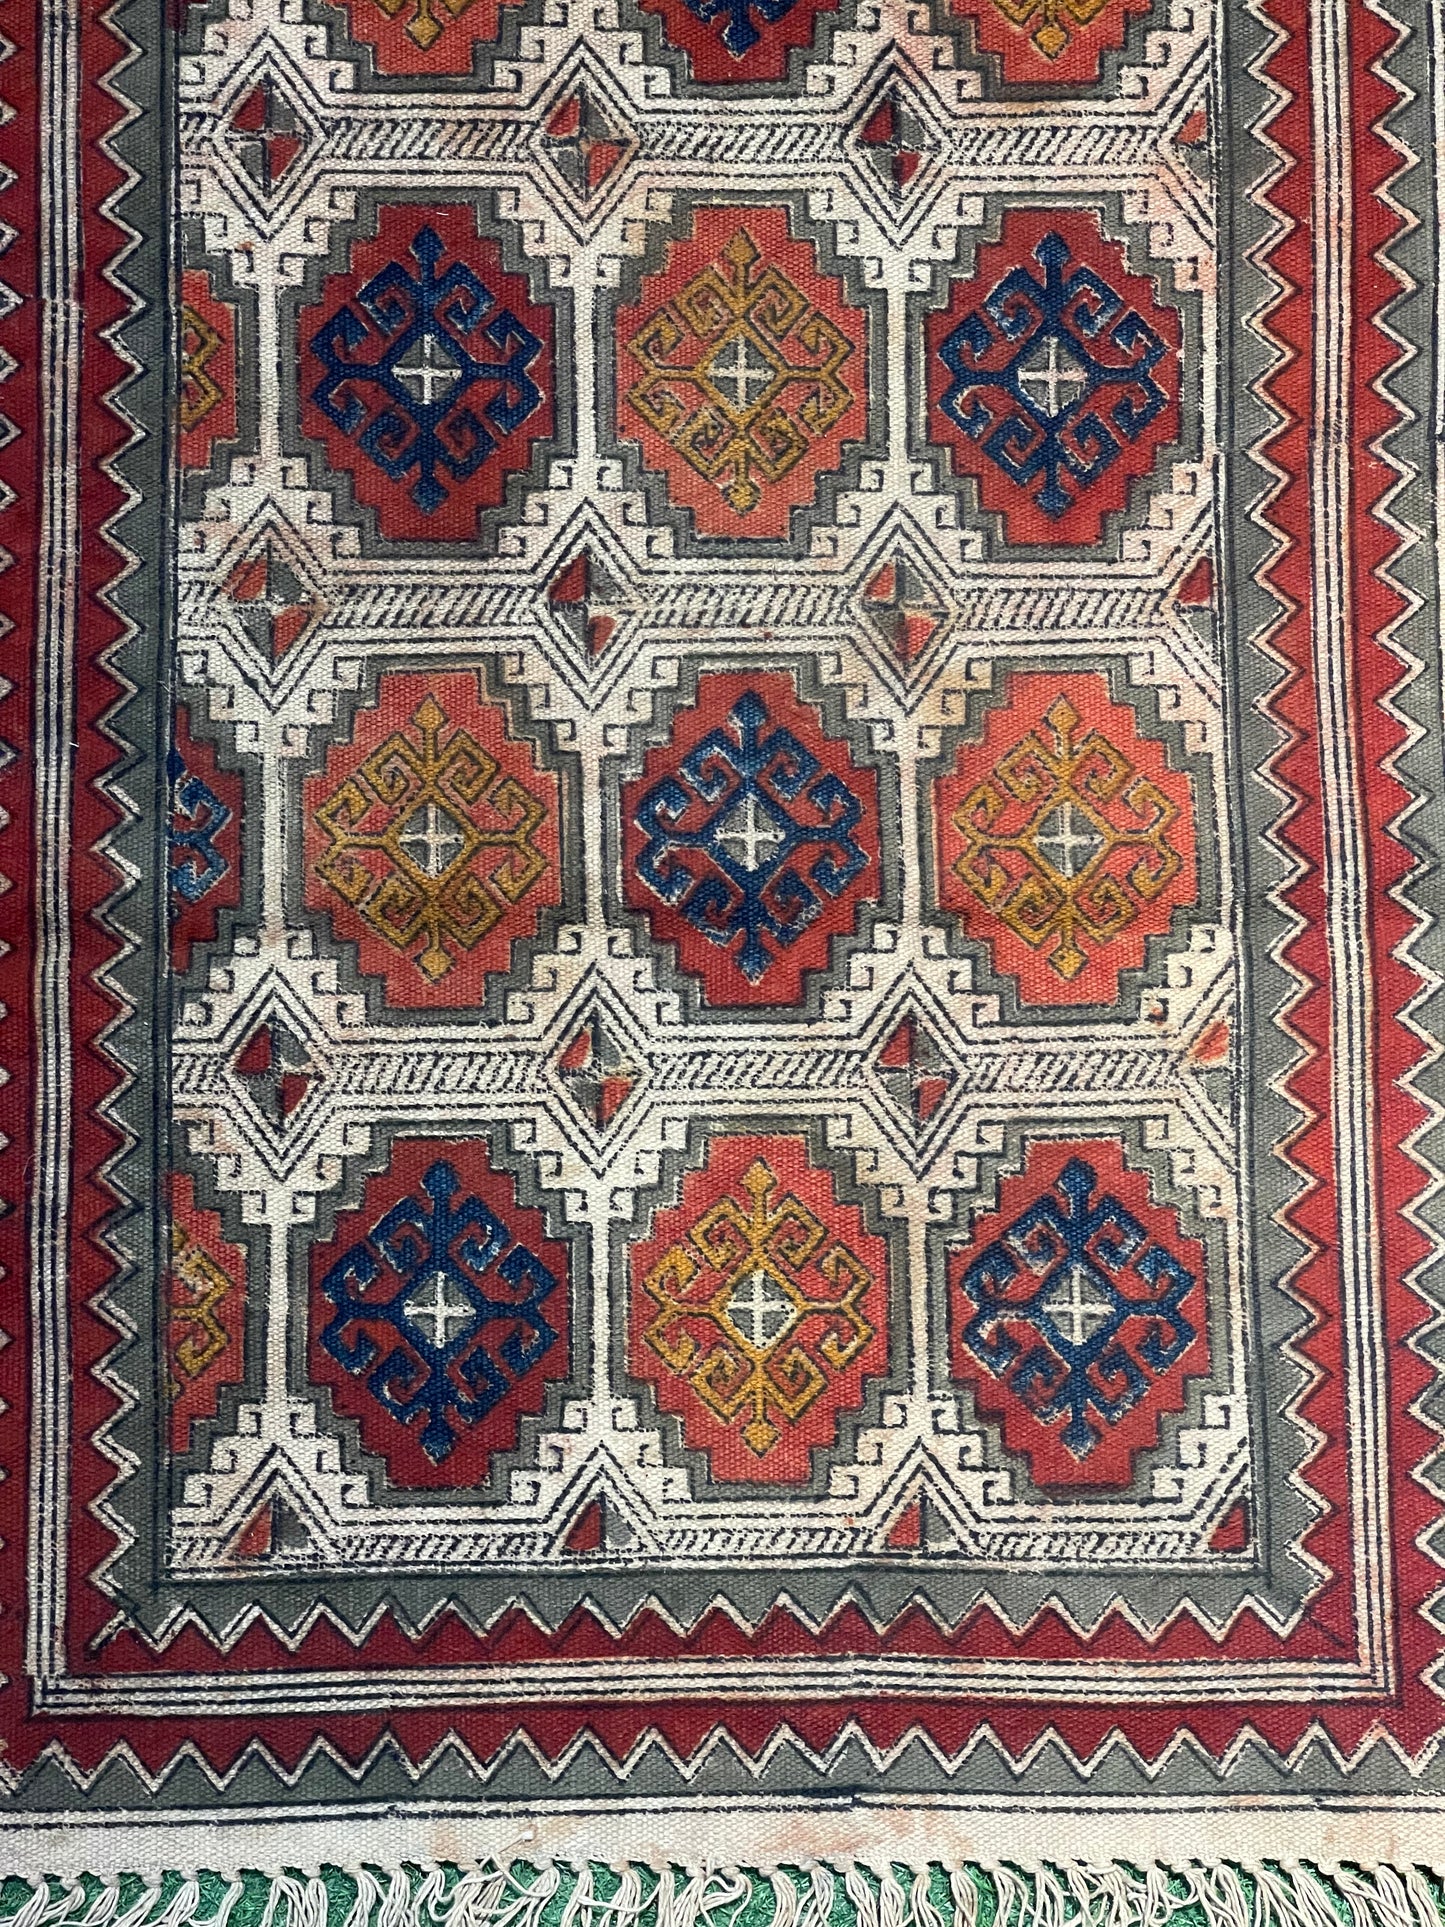 Geometric design cotton Kalamkari hand block printed runner carpet 2 x 5 ft